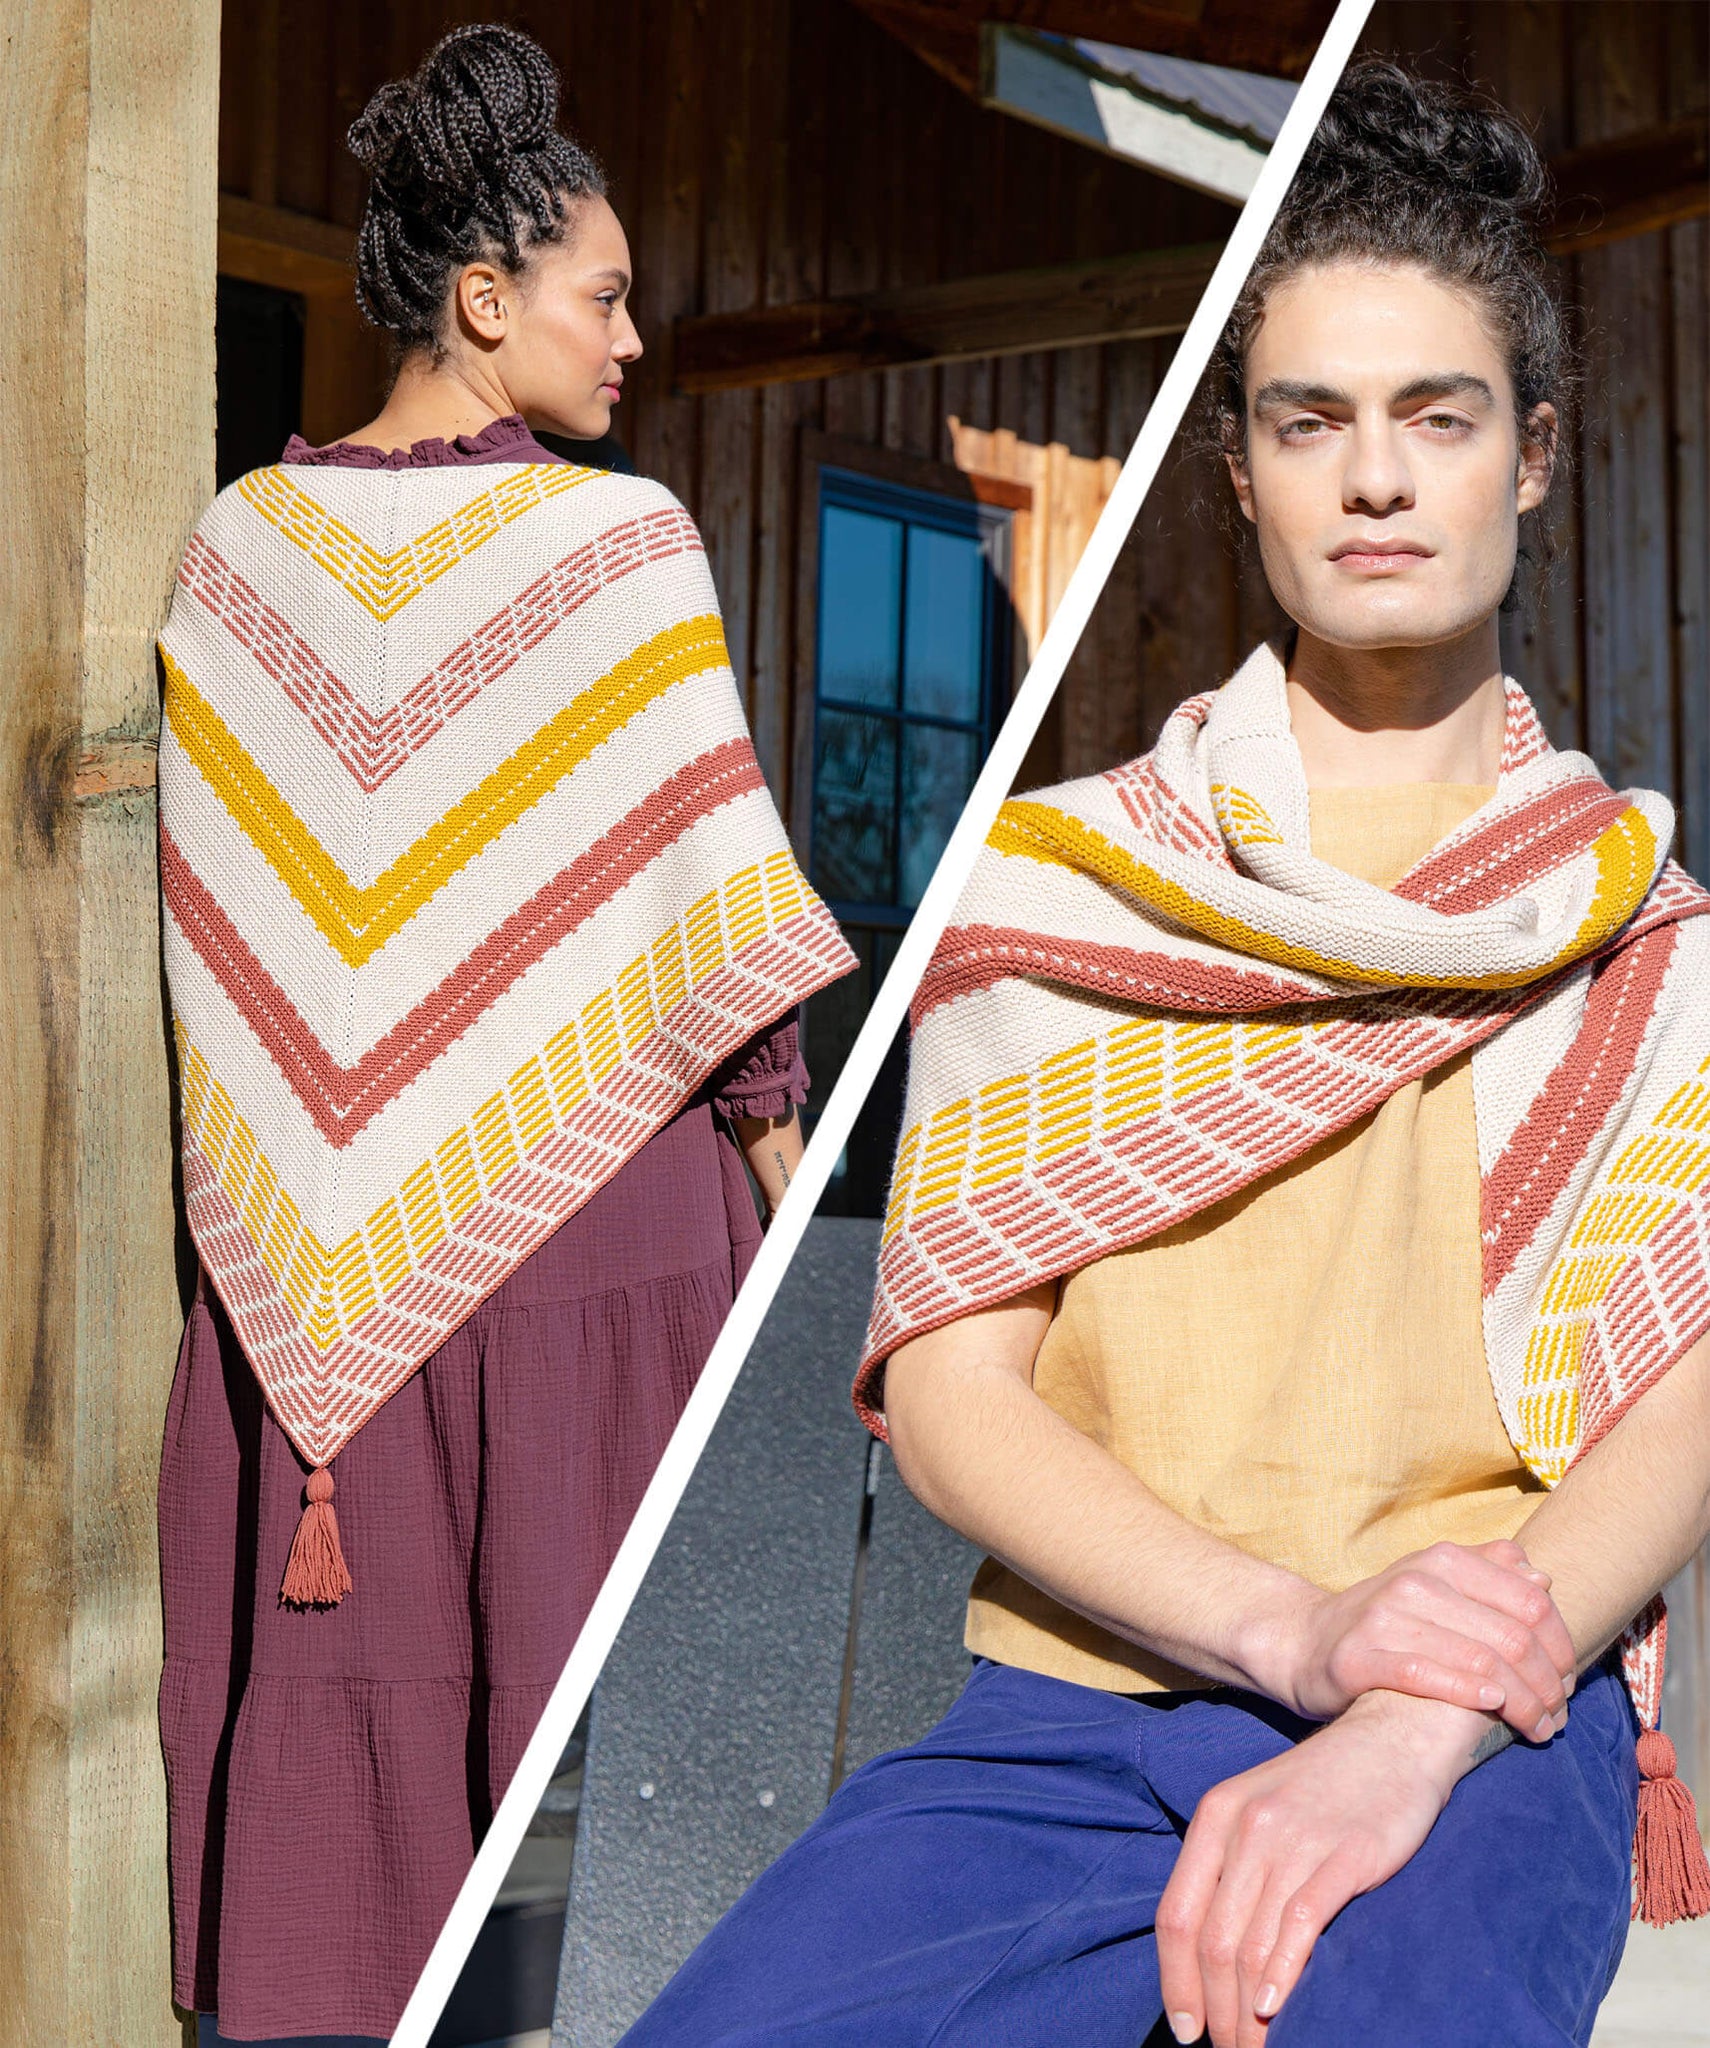 Bajadas Shawl | Knitting Pattern by Bérangère Cailliau